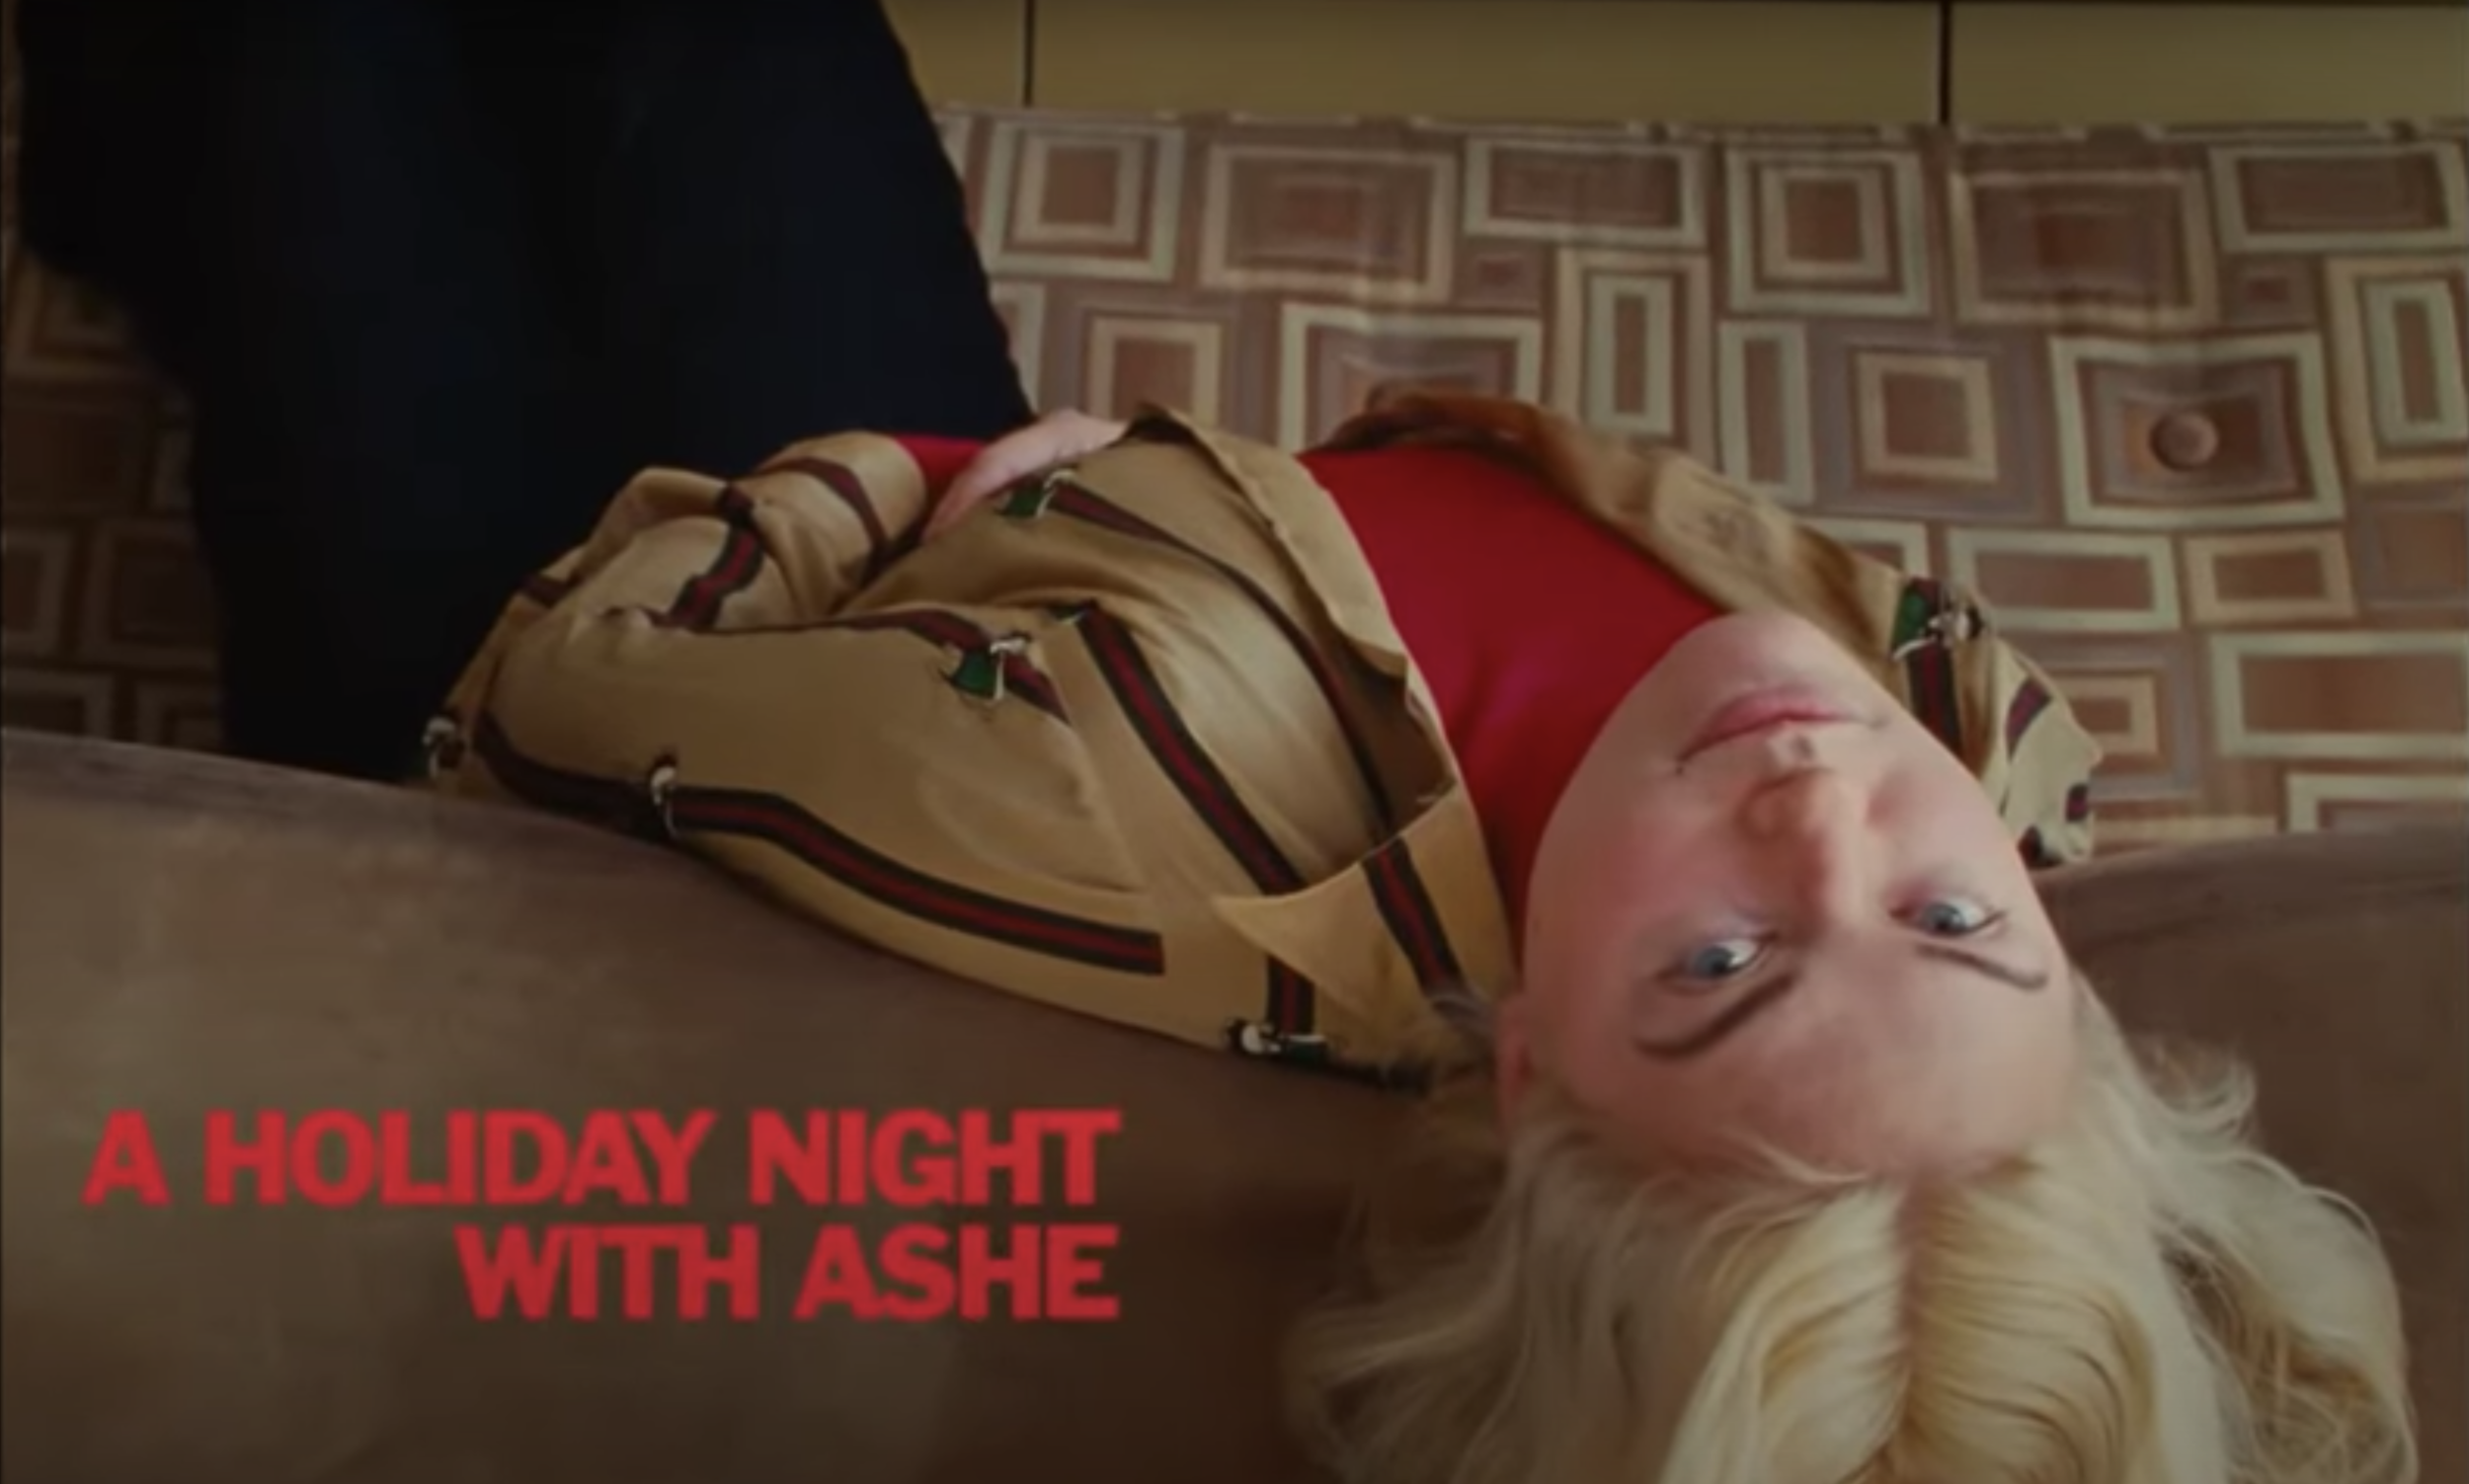 "A Holiday Night with Ashe" / Director Josh Sondock / 2019